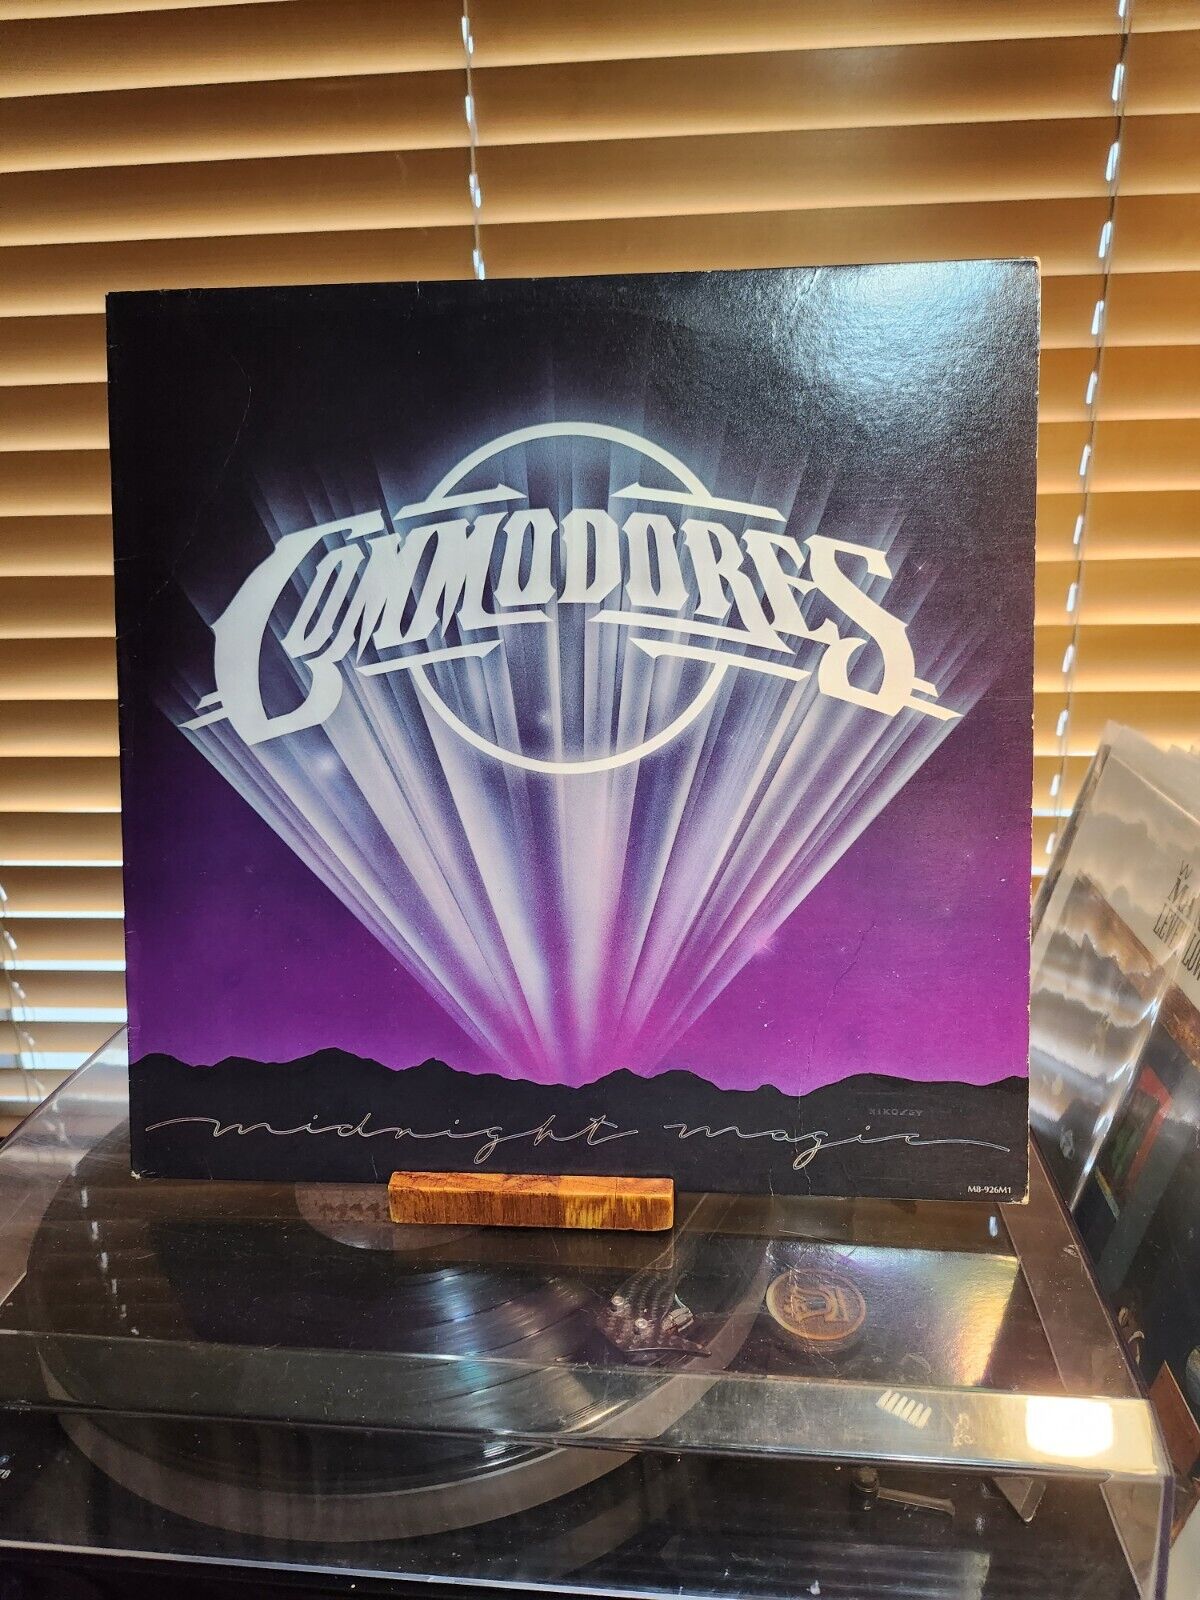 Commodores, Midnight Magic, 1979 1st Motown Stereo, M8-926M1